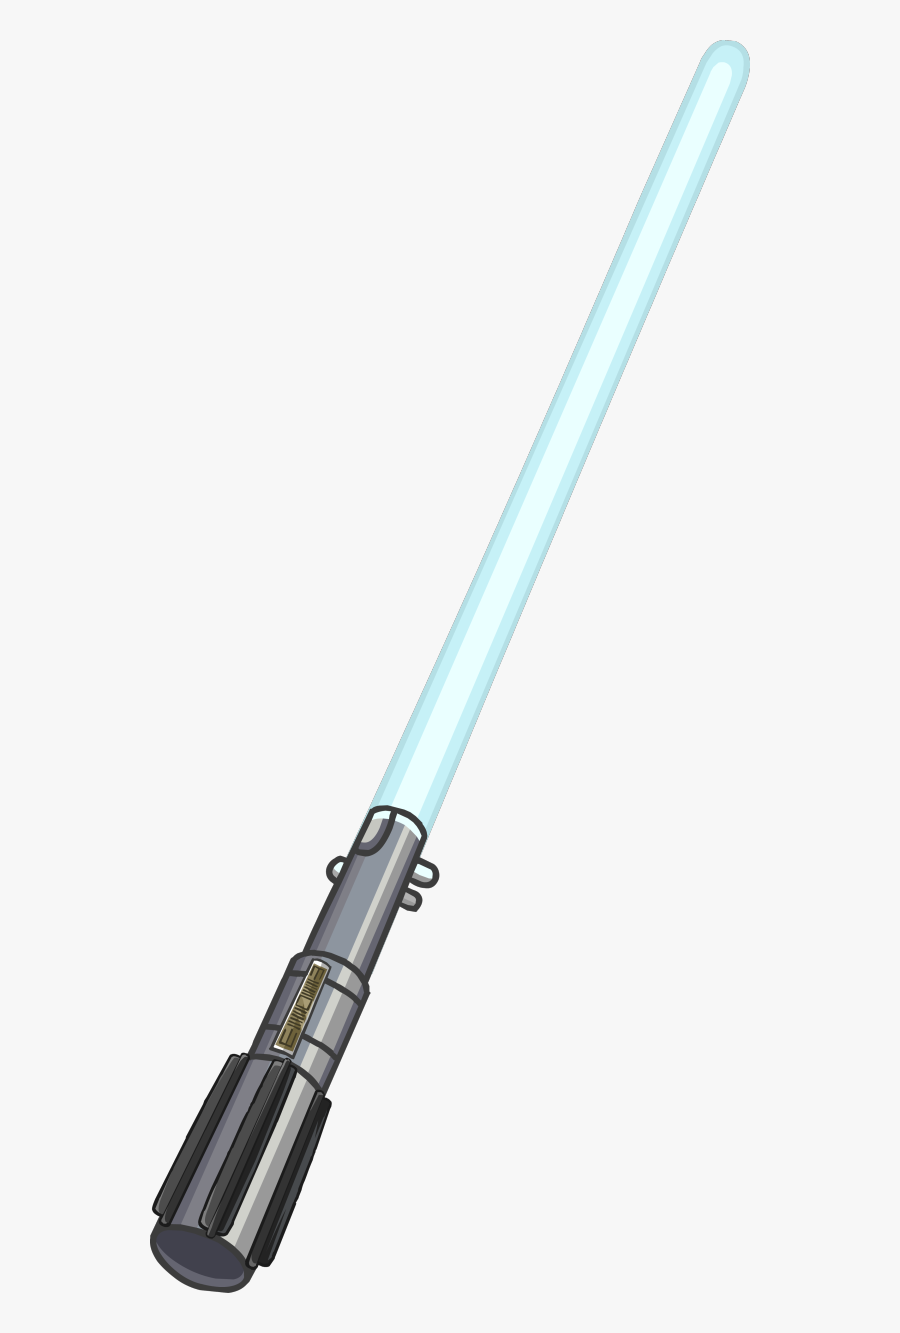 Laser Clipart Luke Skywalker Lightsaber - Fiber Optic 4 C, Transparent Clipart